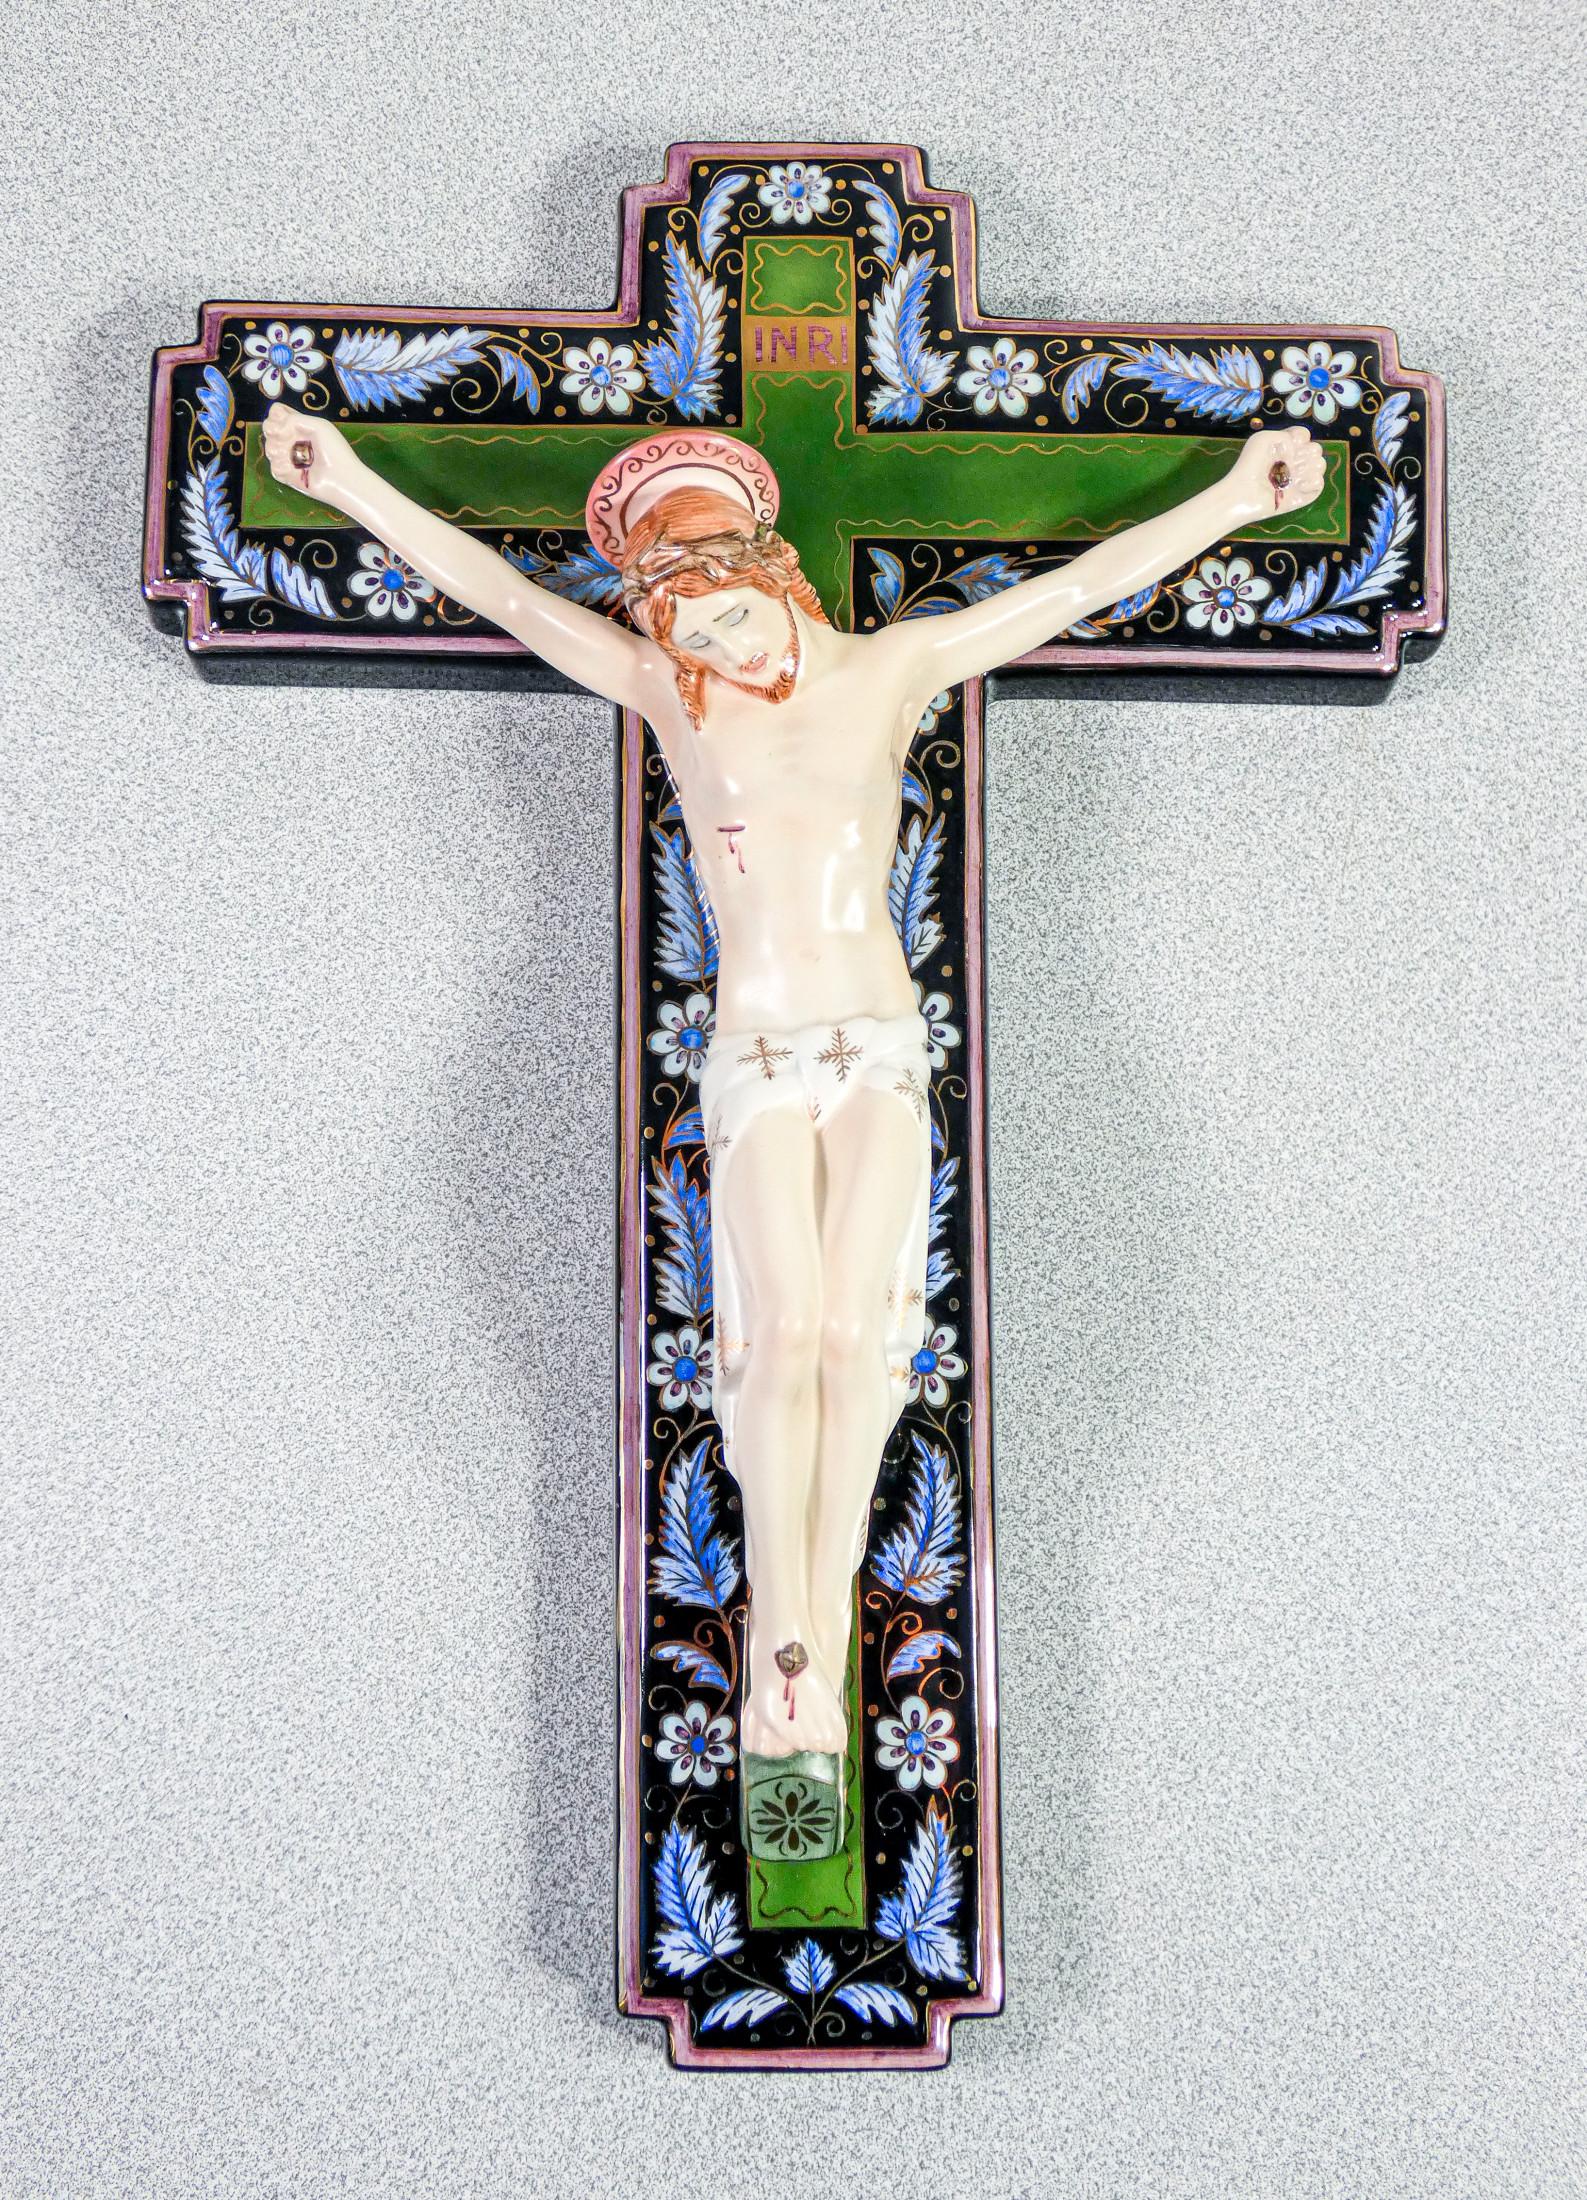 LENCI
céramique peinte à la main
crucifix, décorateur
Maria BALOSSI

ORIGINE
Turin, Italie

PERIODE
1930s

AUTEUR
Maria BALOSSI
Décorateur à l'usine de céramique de Turin 